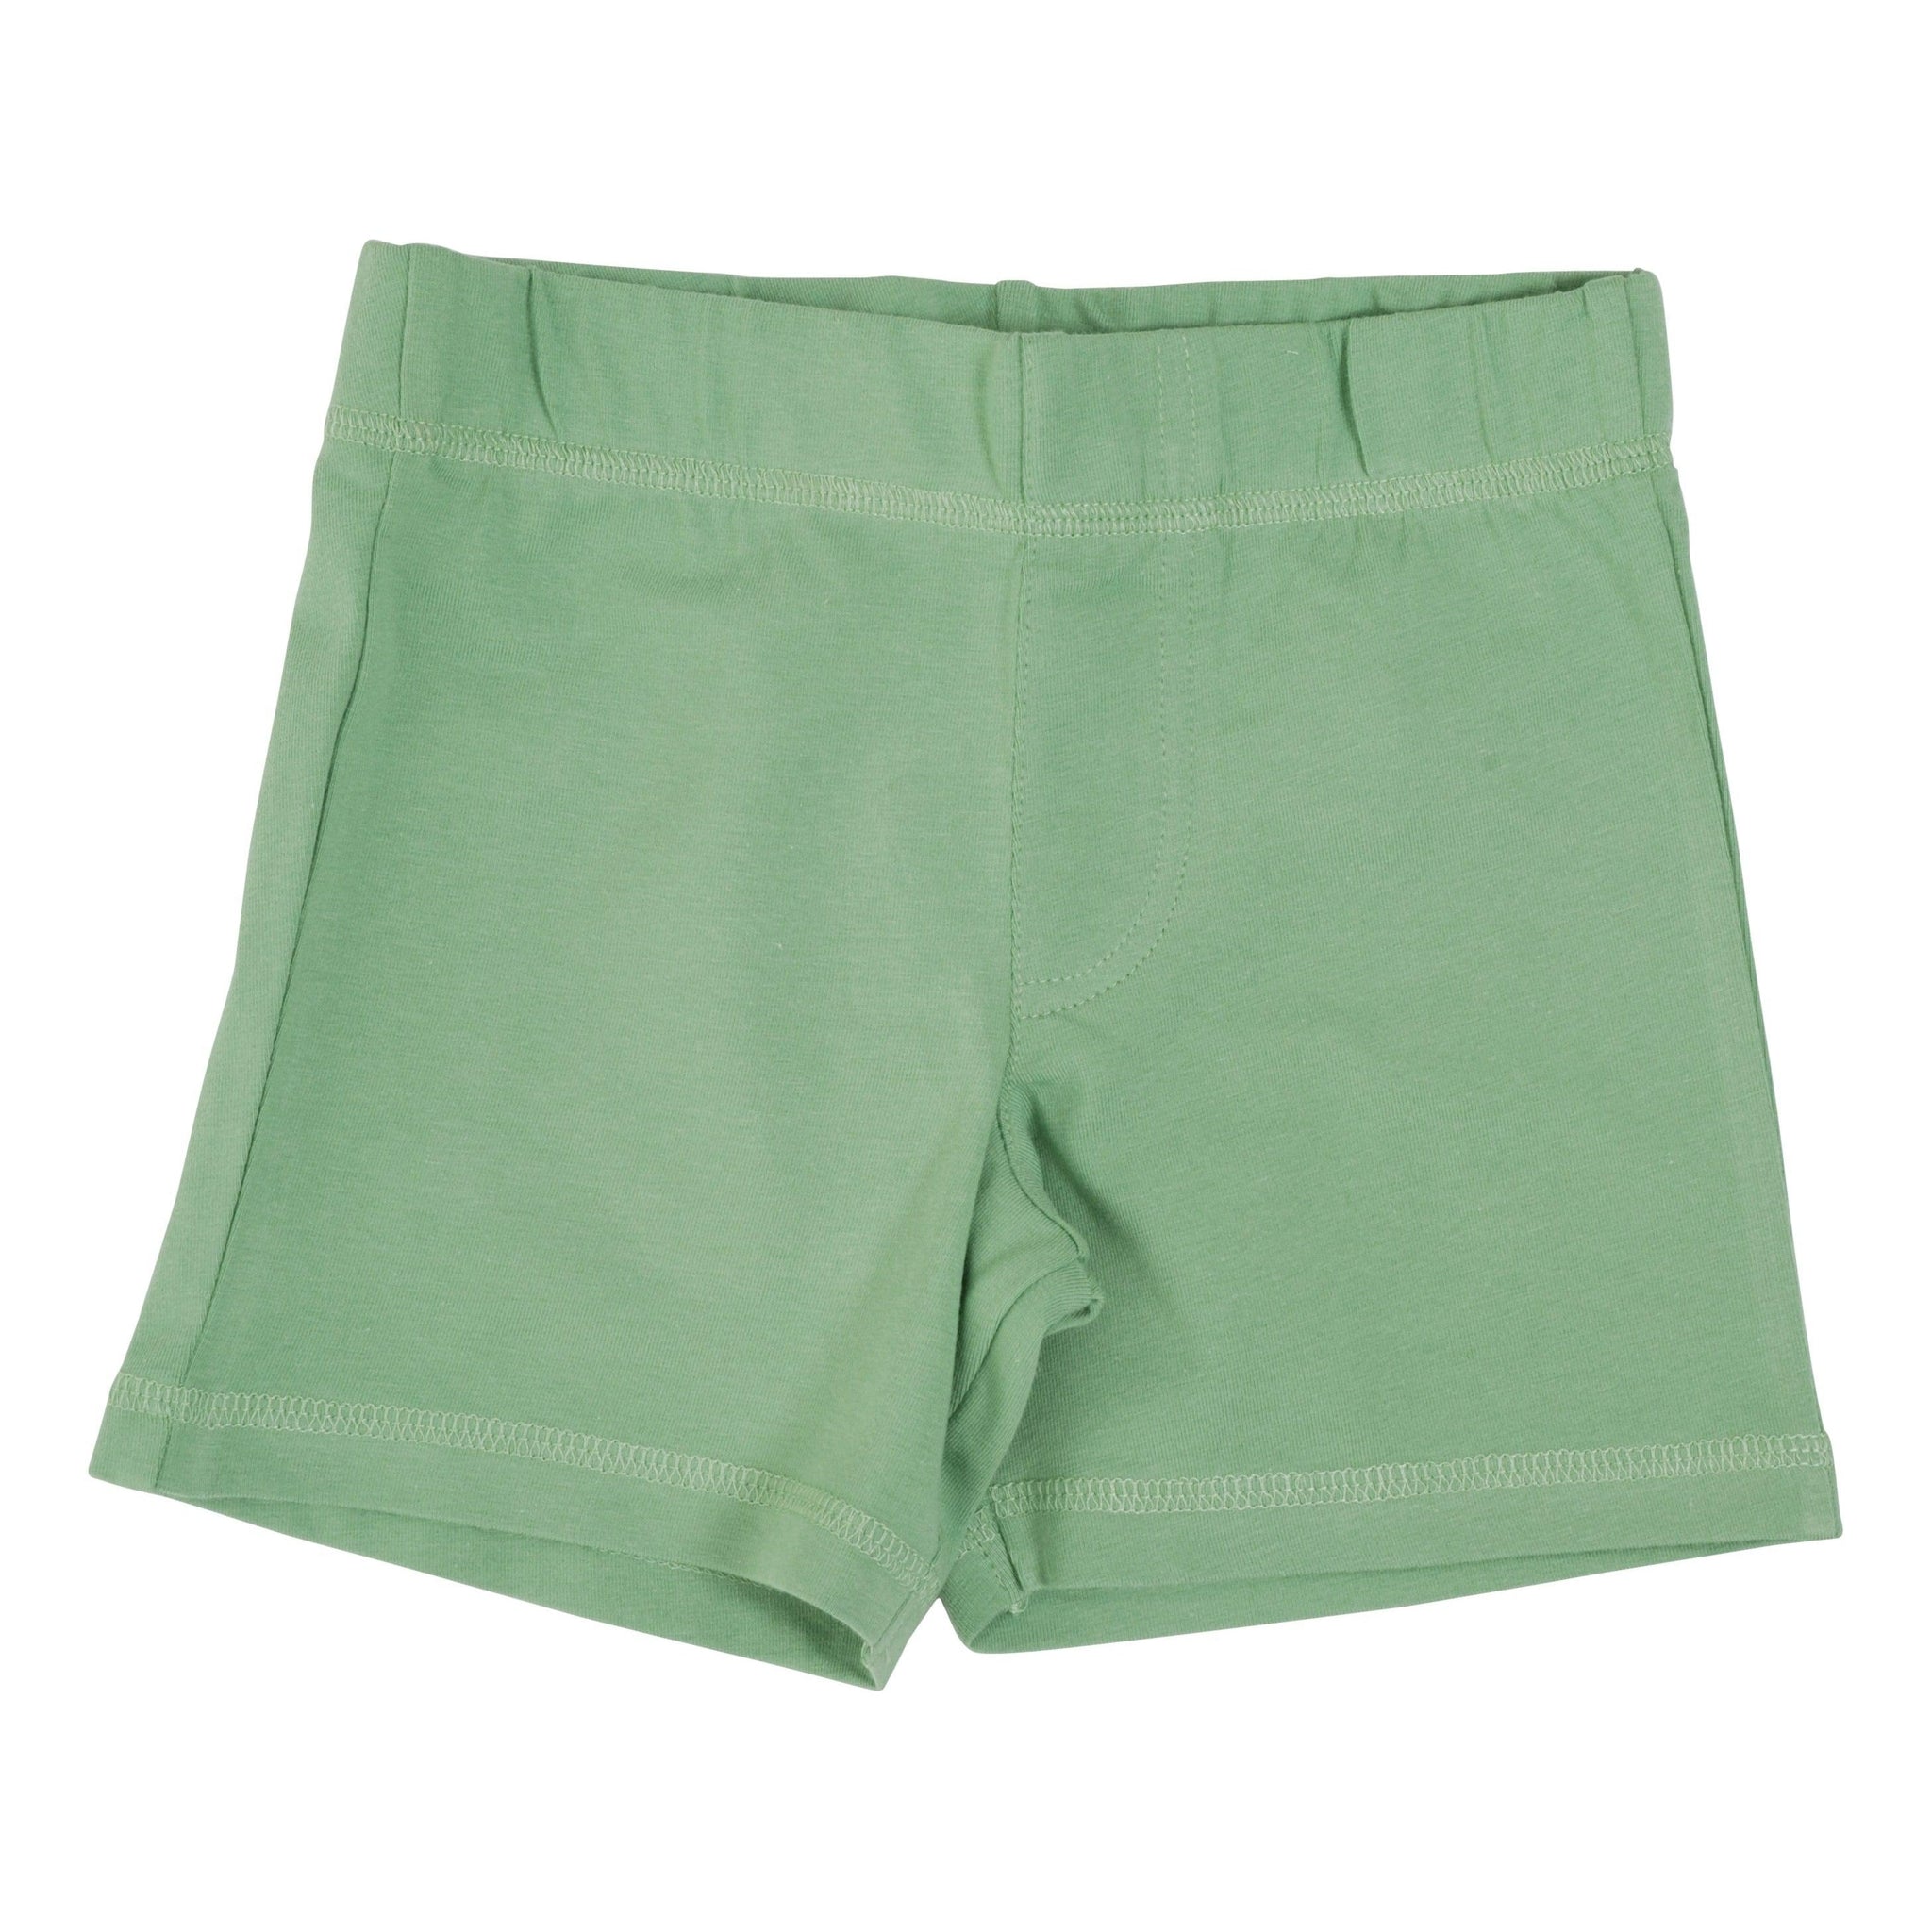 More Than A FLING - Mineral Green Shorts